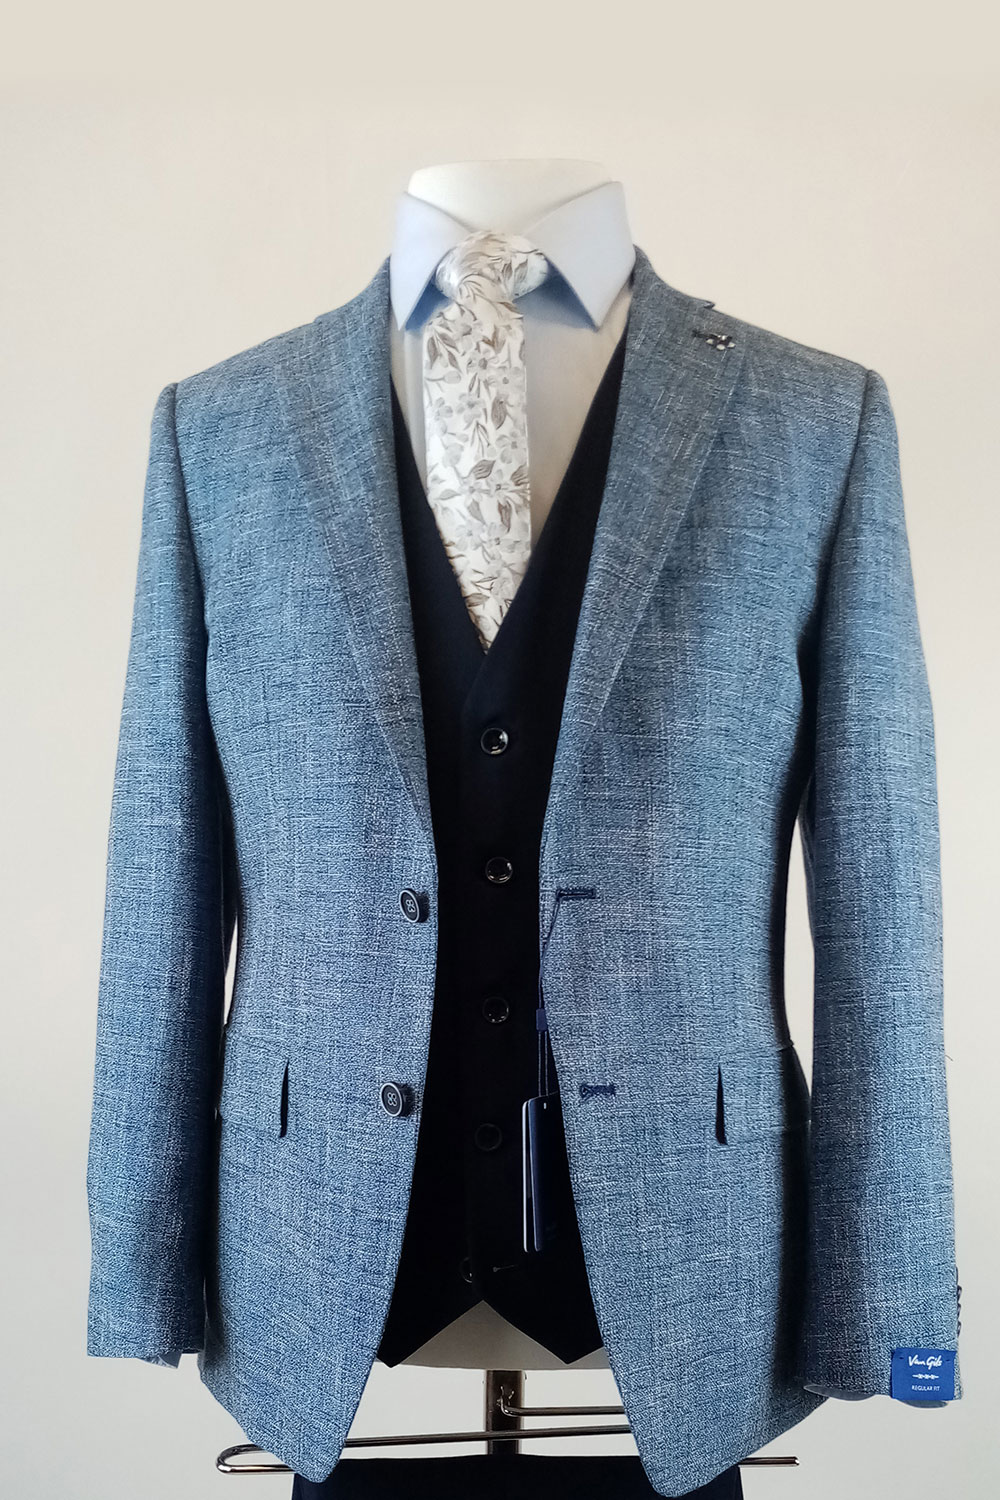 Simon Blue 3 Piece Suit - Tom Murphy's Formal and Menswear